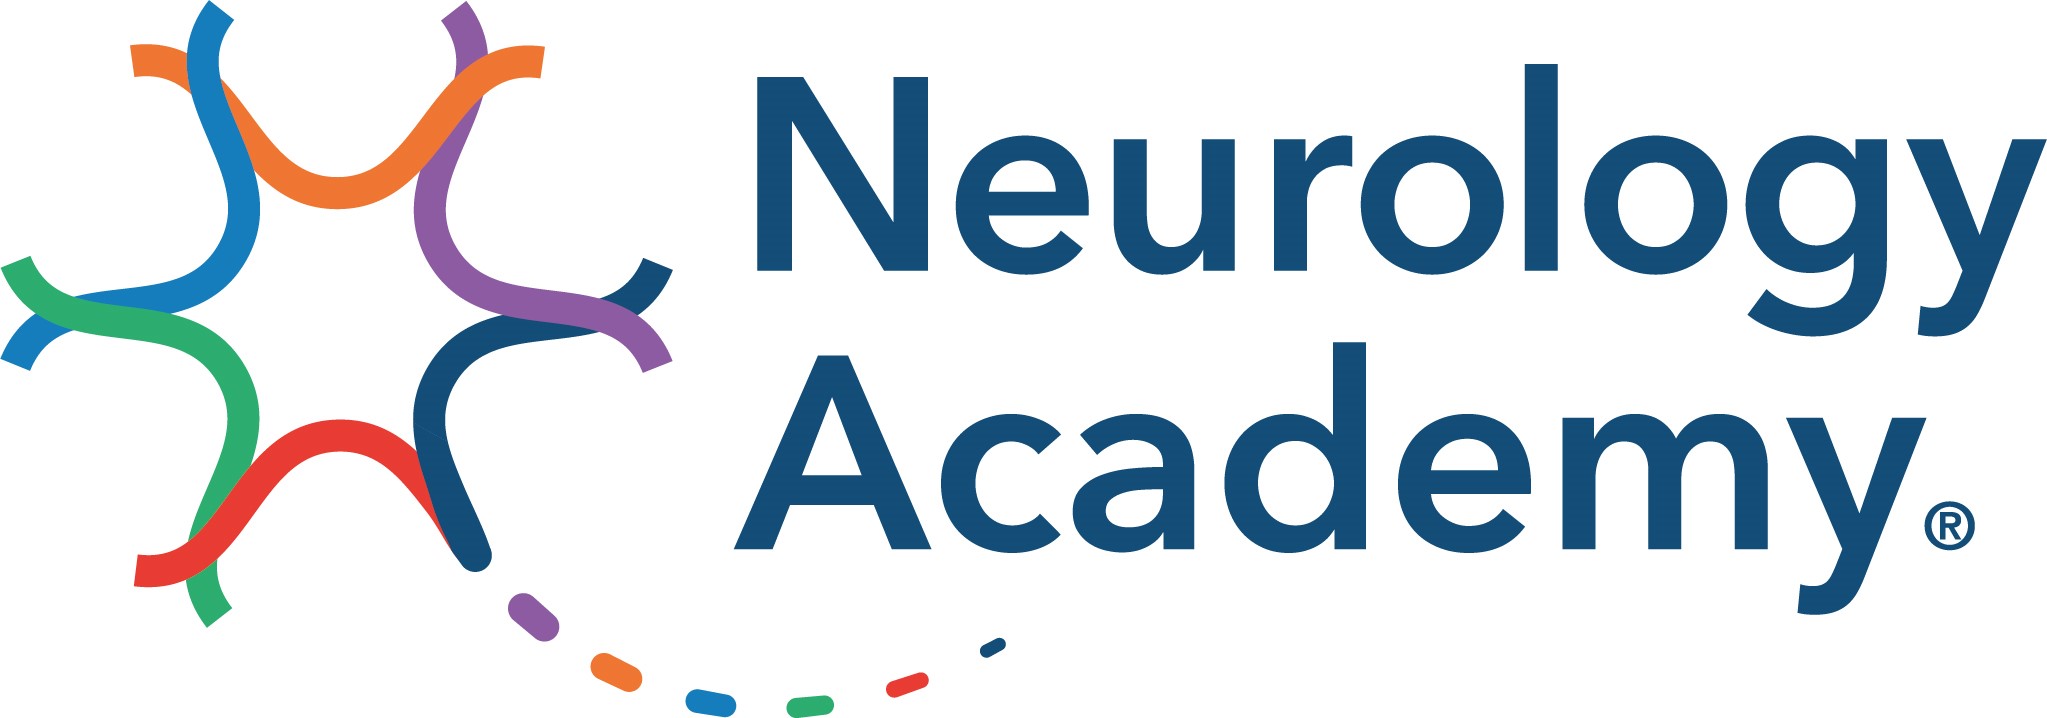 Neurology Academy